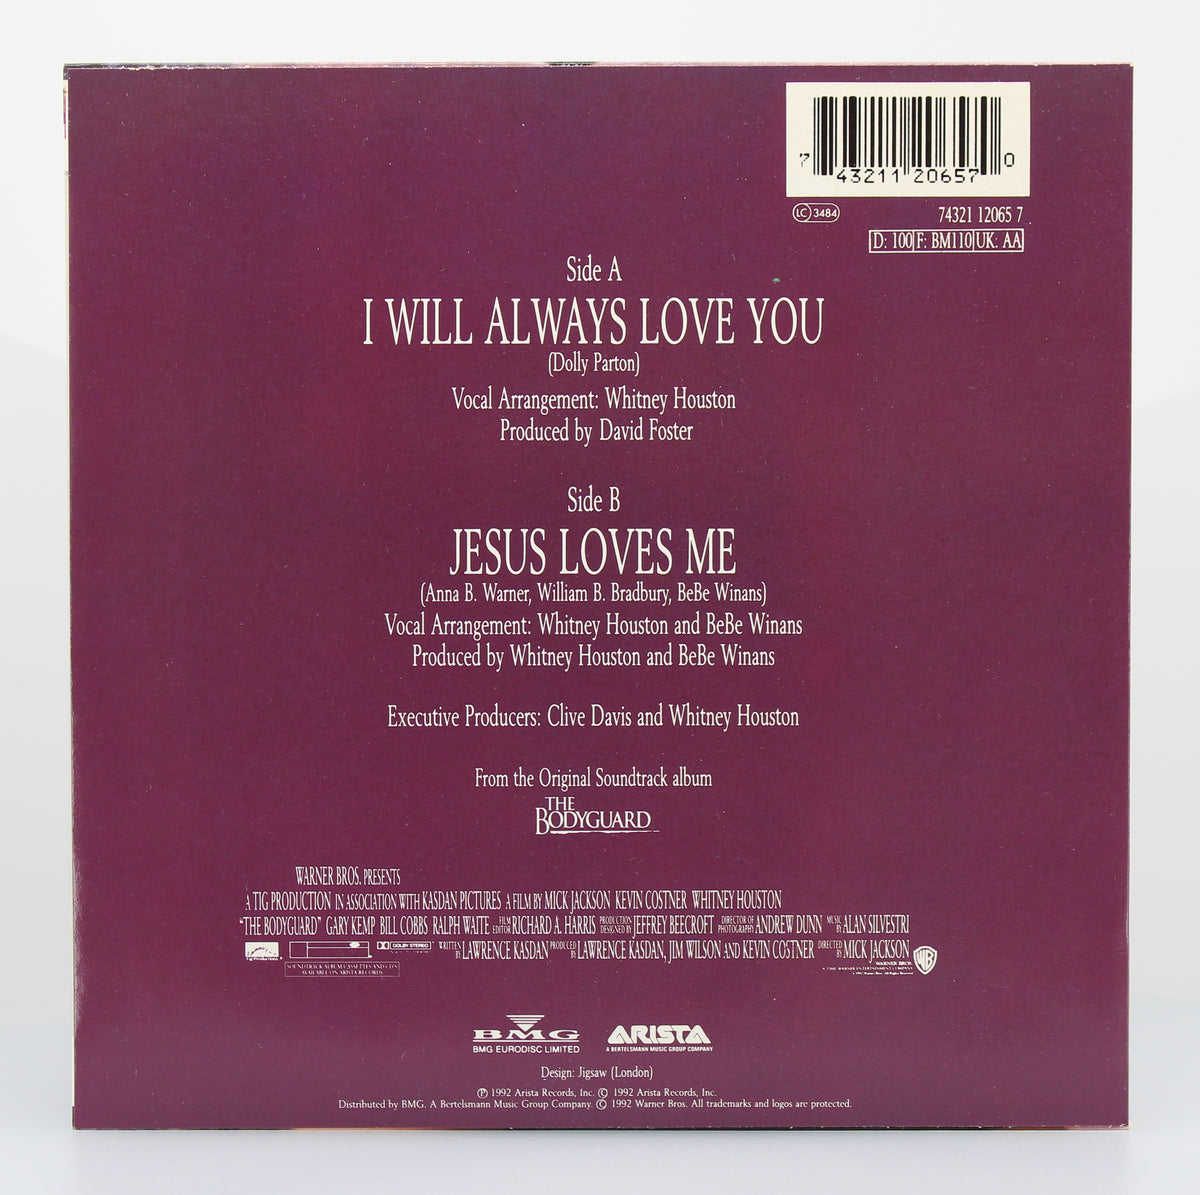 Whitney Houston – I Will Always Love You, Vinyl, 7&quot;, 45 RPM, Single, France 1992